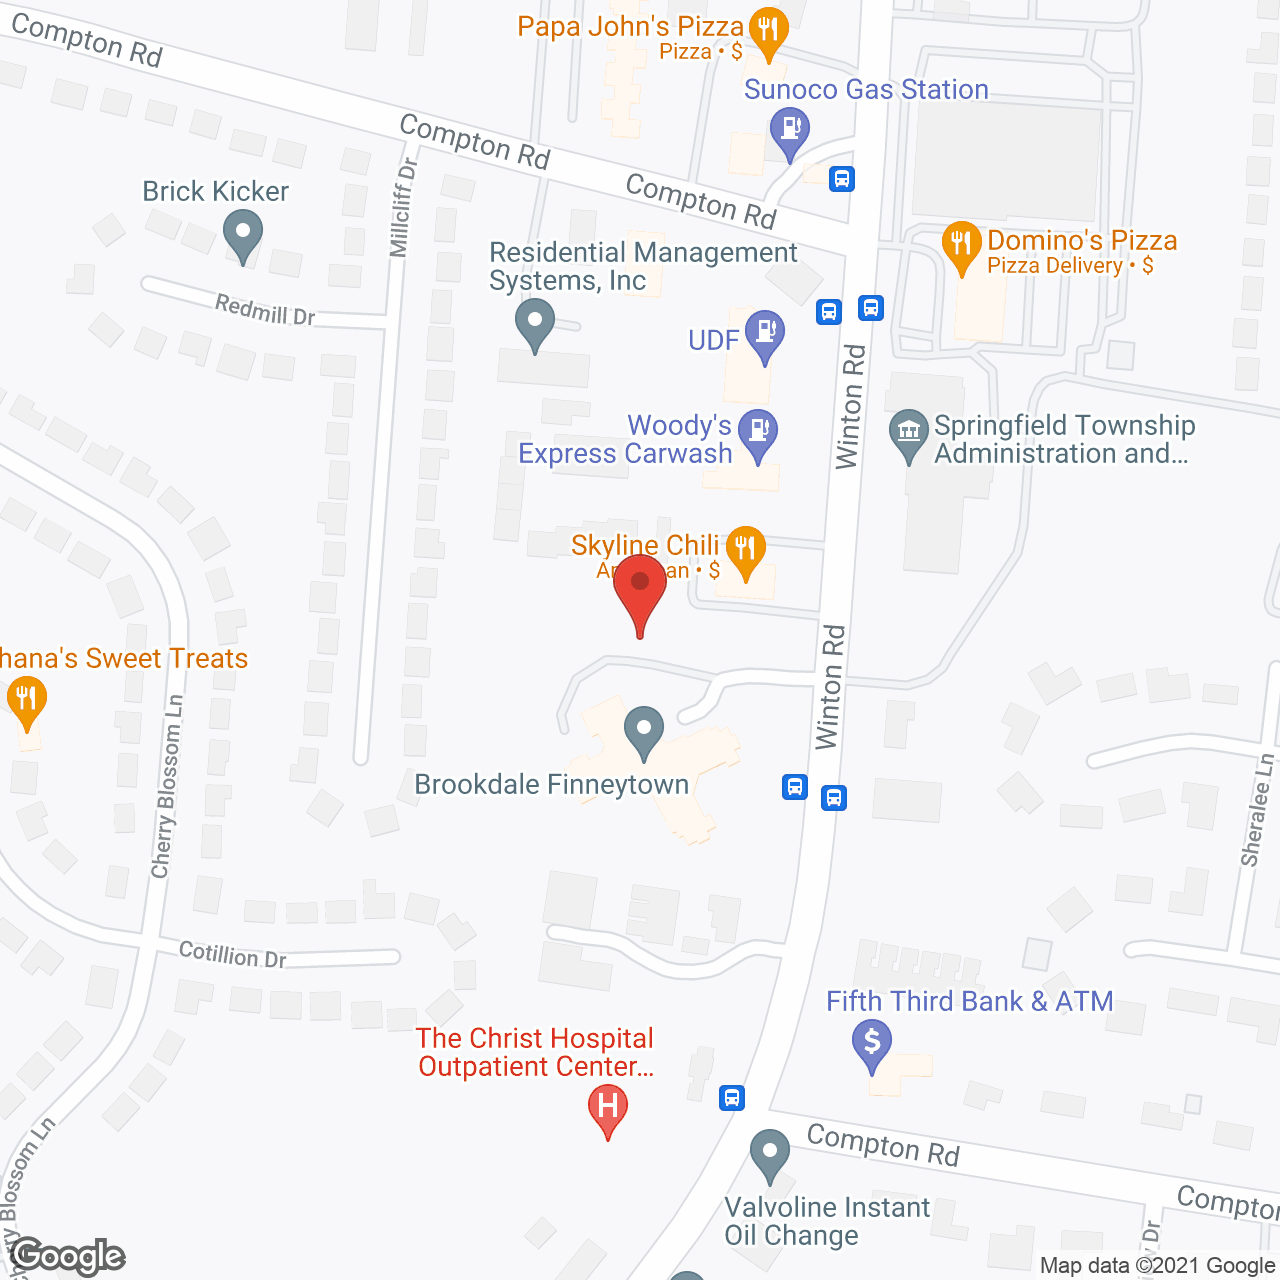 Brookdale Finneytown in google map